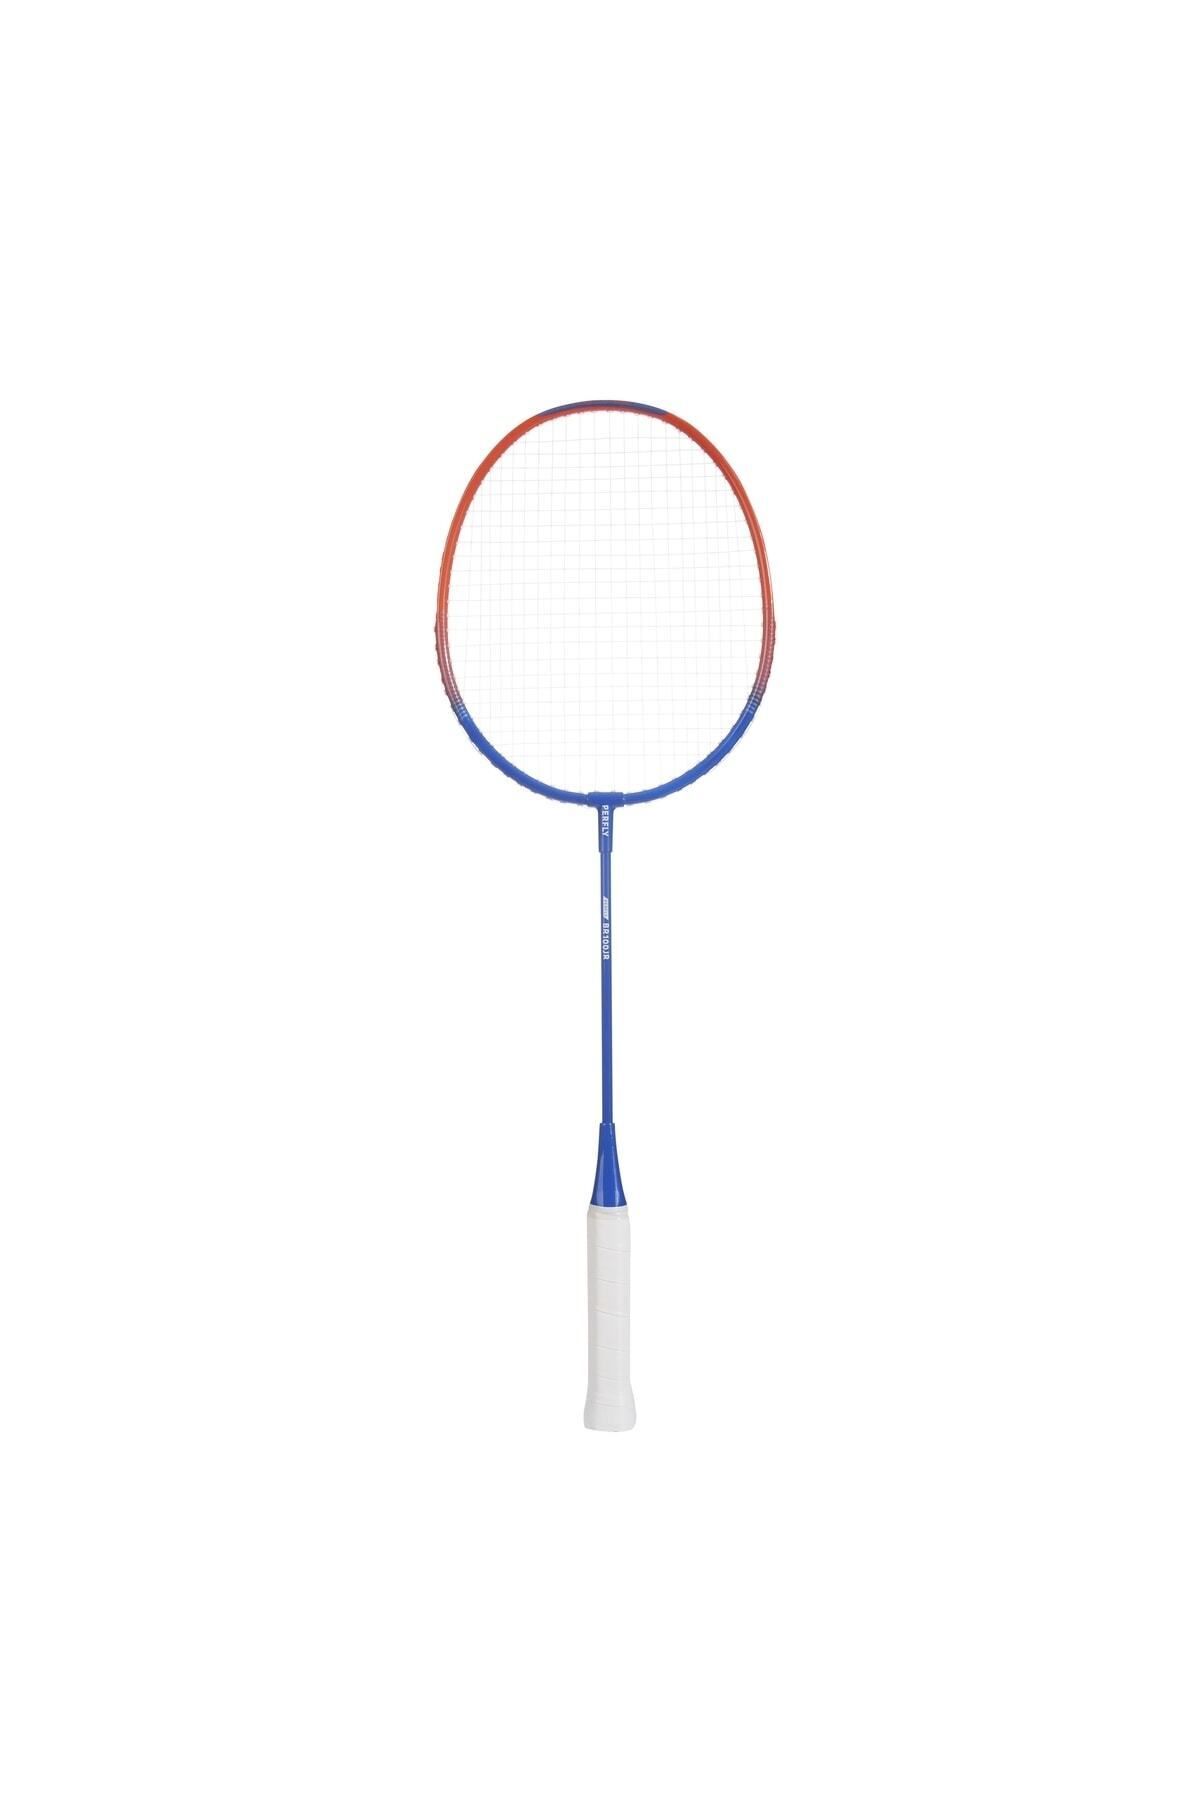 Decathlon Perfly Çocuk Badminton Raketi - Mavi / Kırmızı - Br100